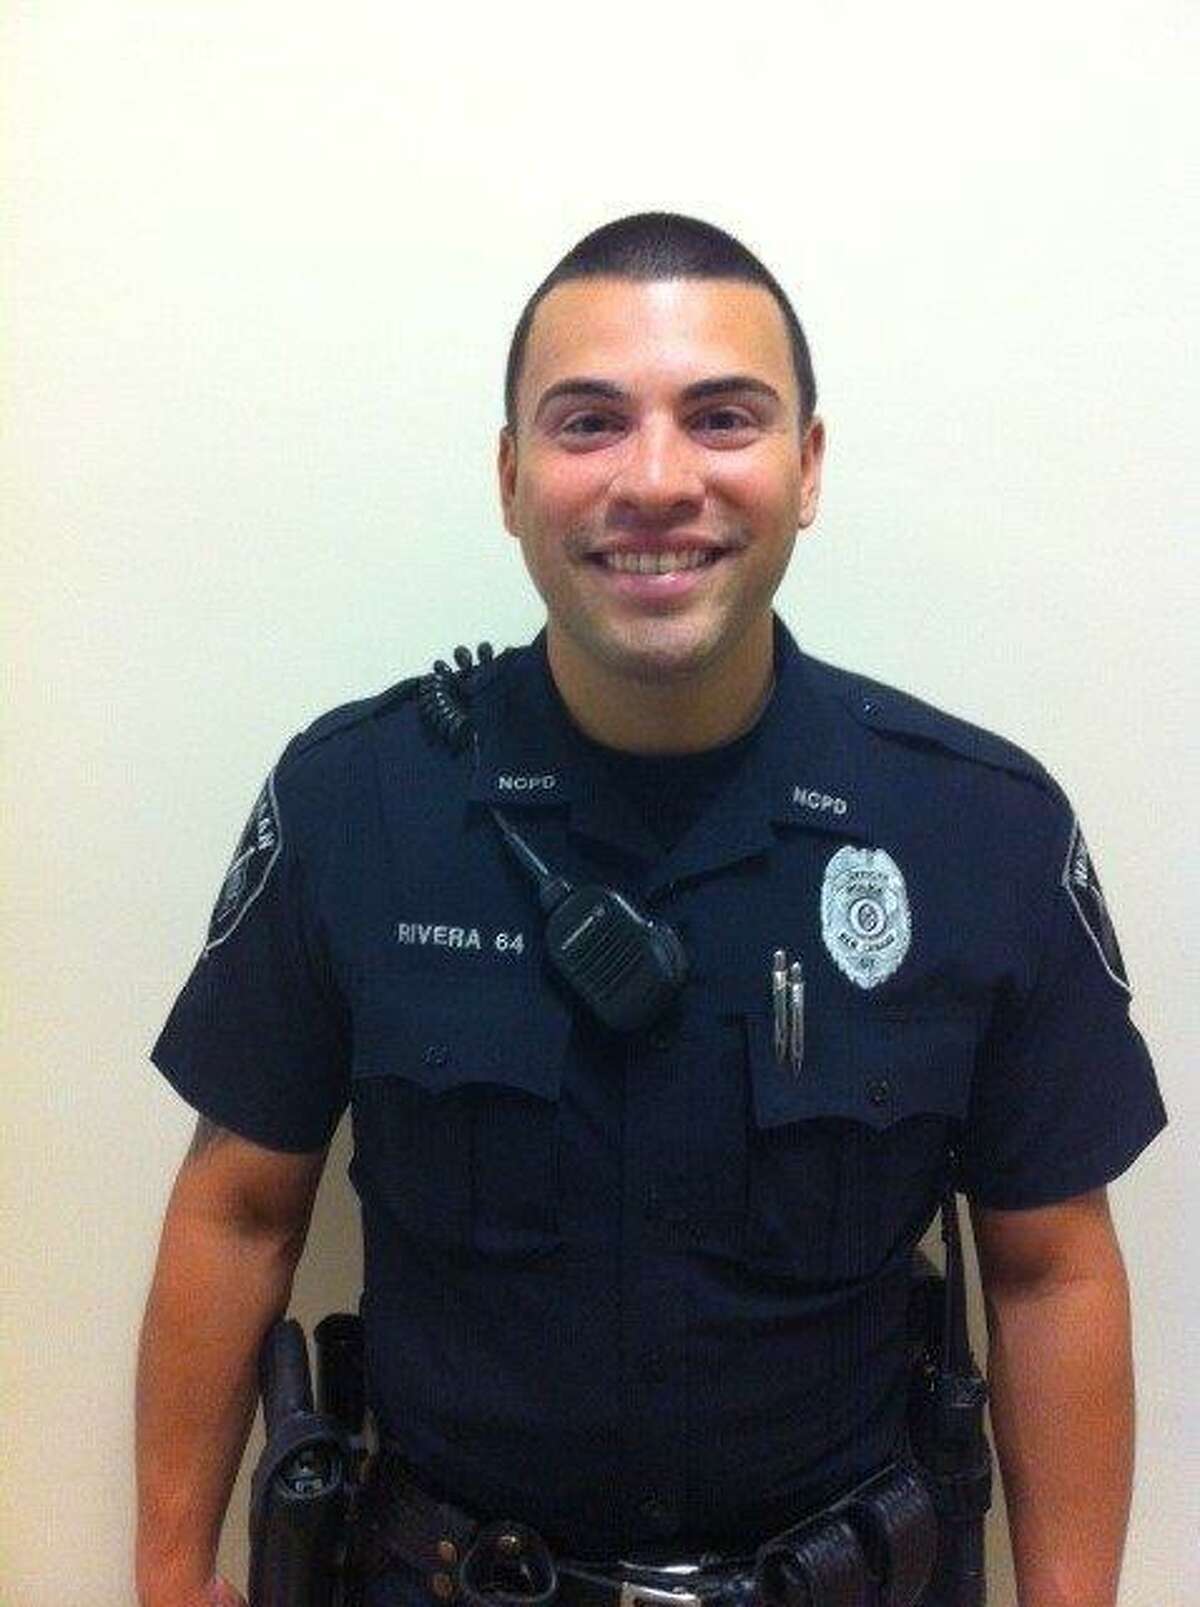 New Canaan police officer David Rivera